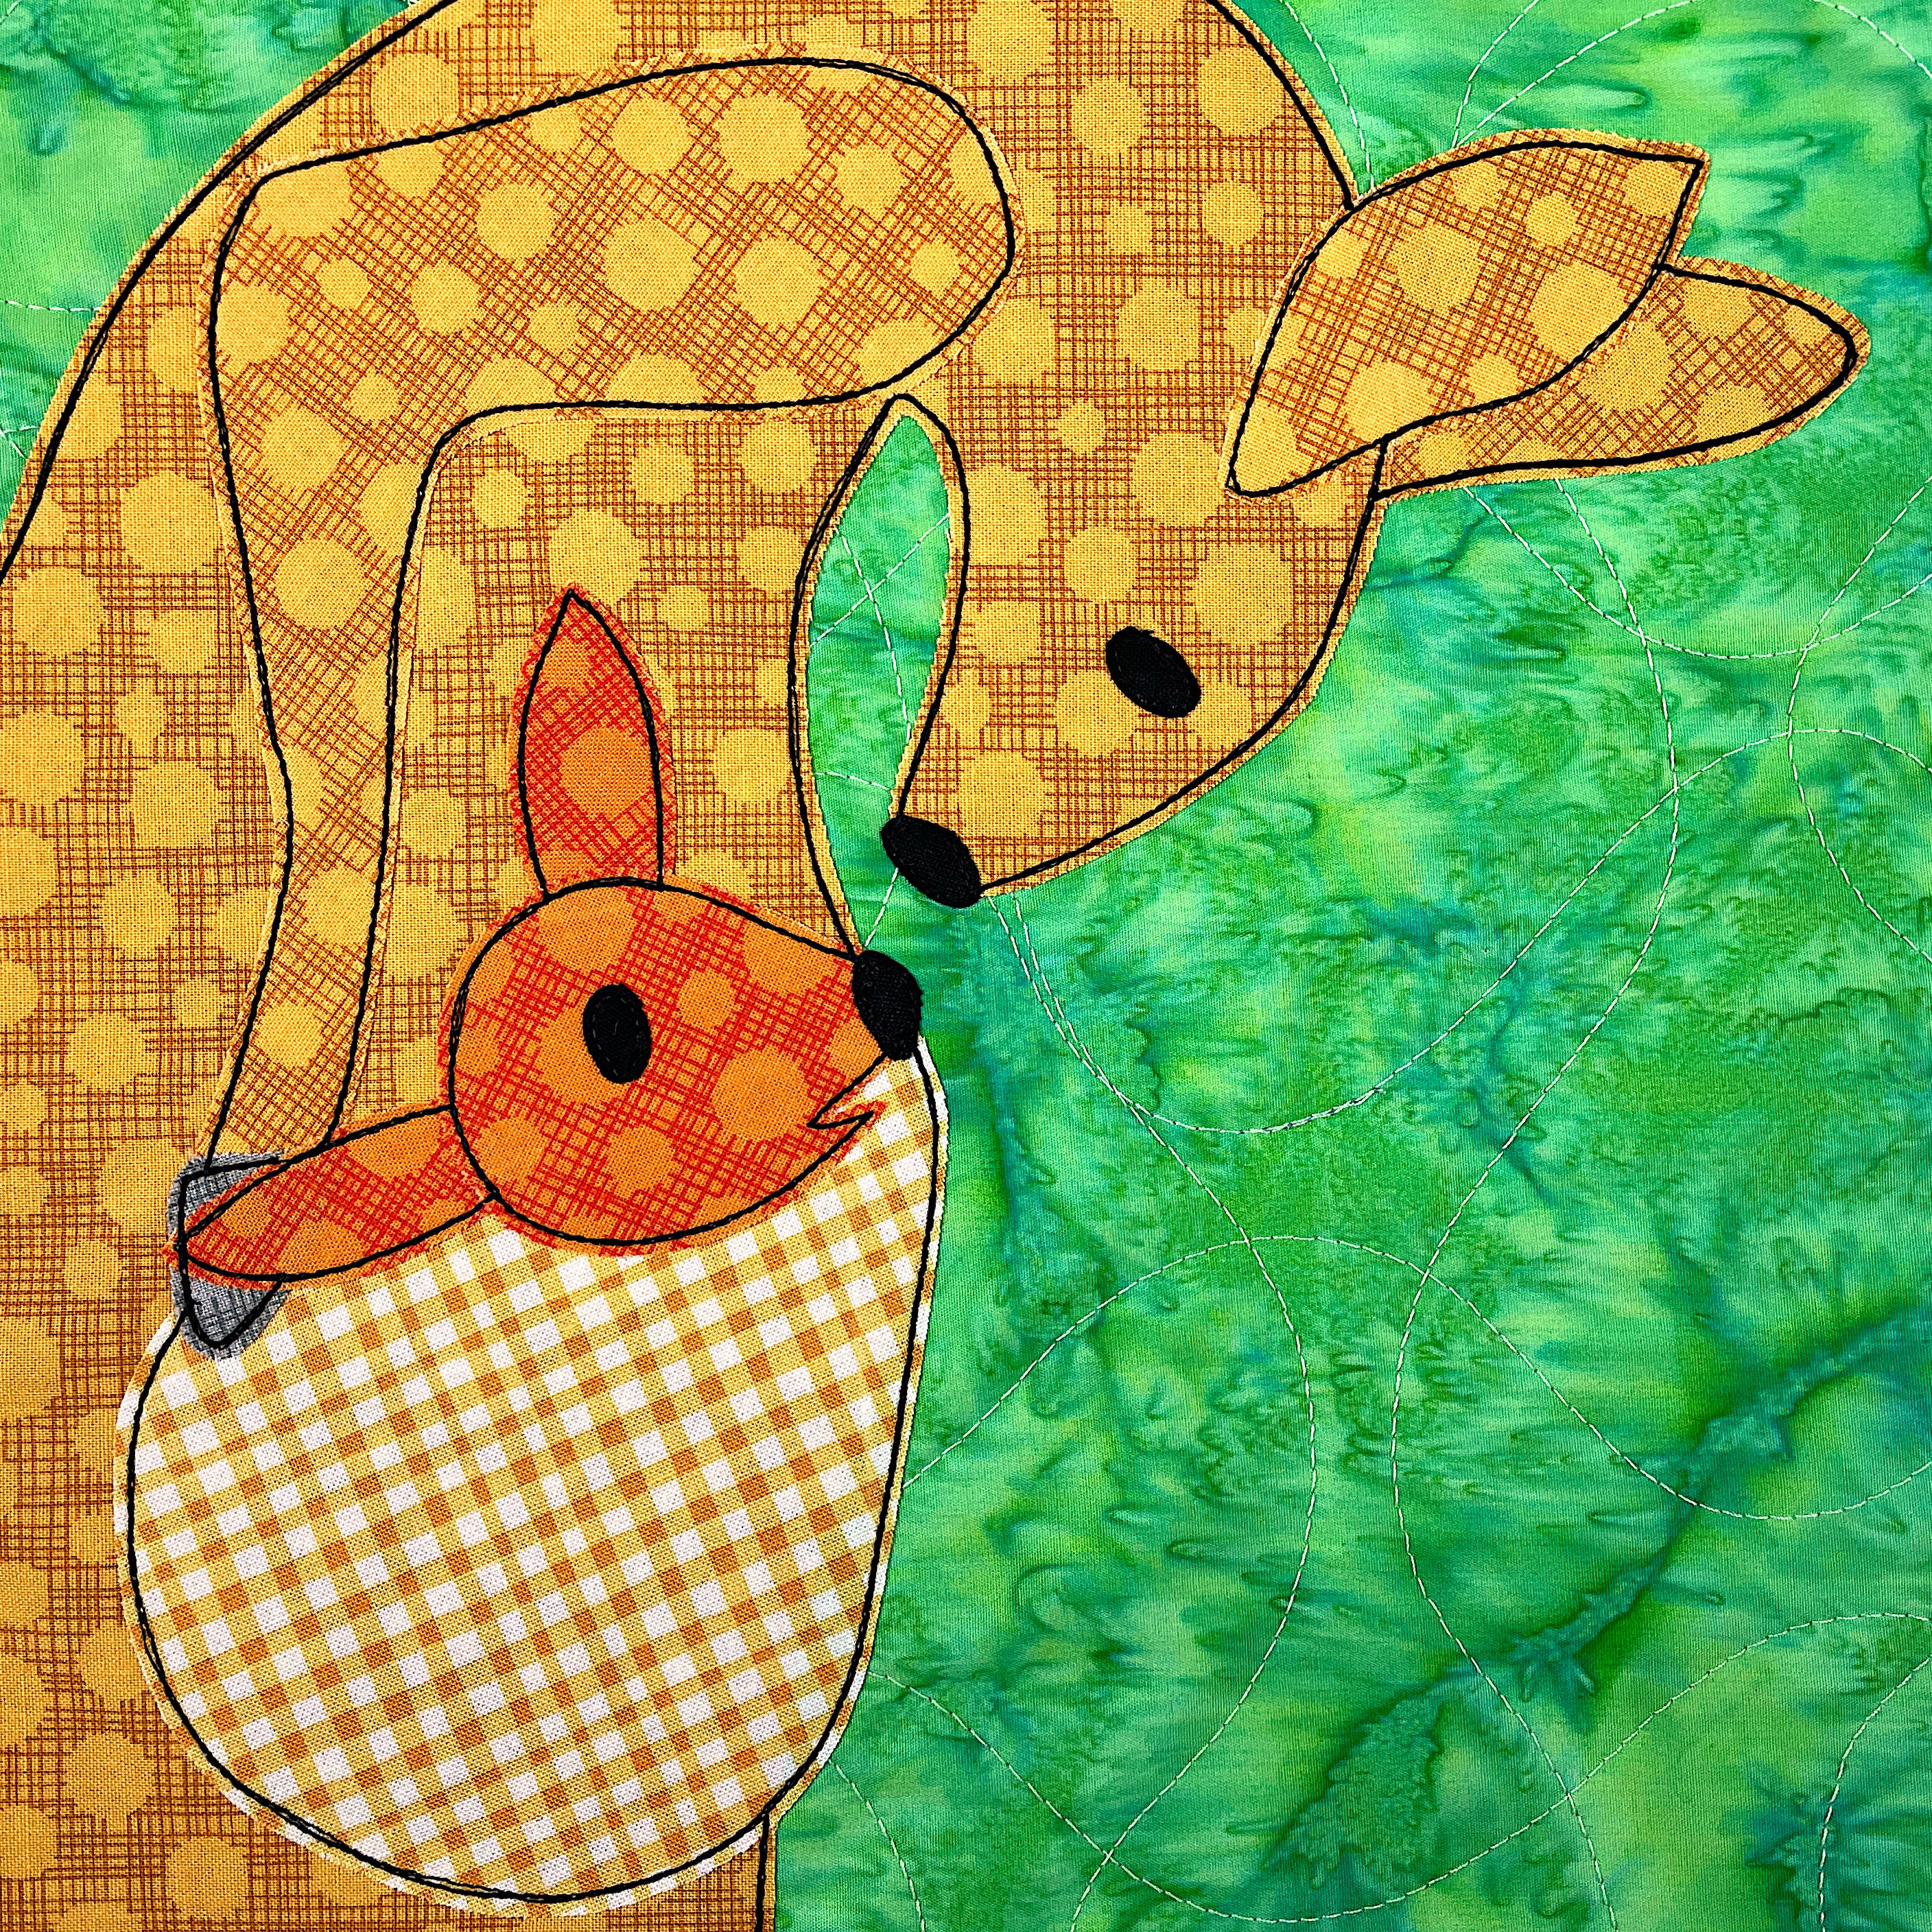 Mama and Baby Kangaroo Applique Pattern